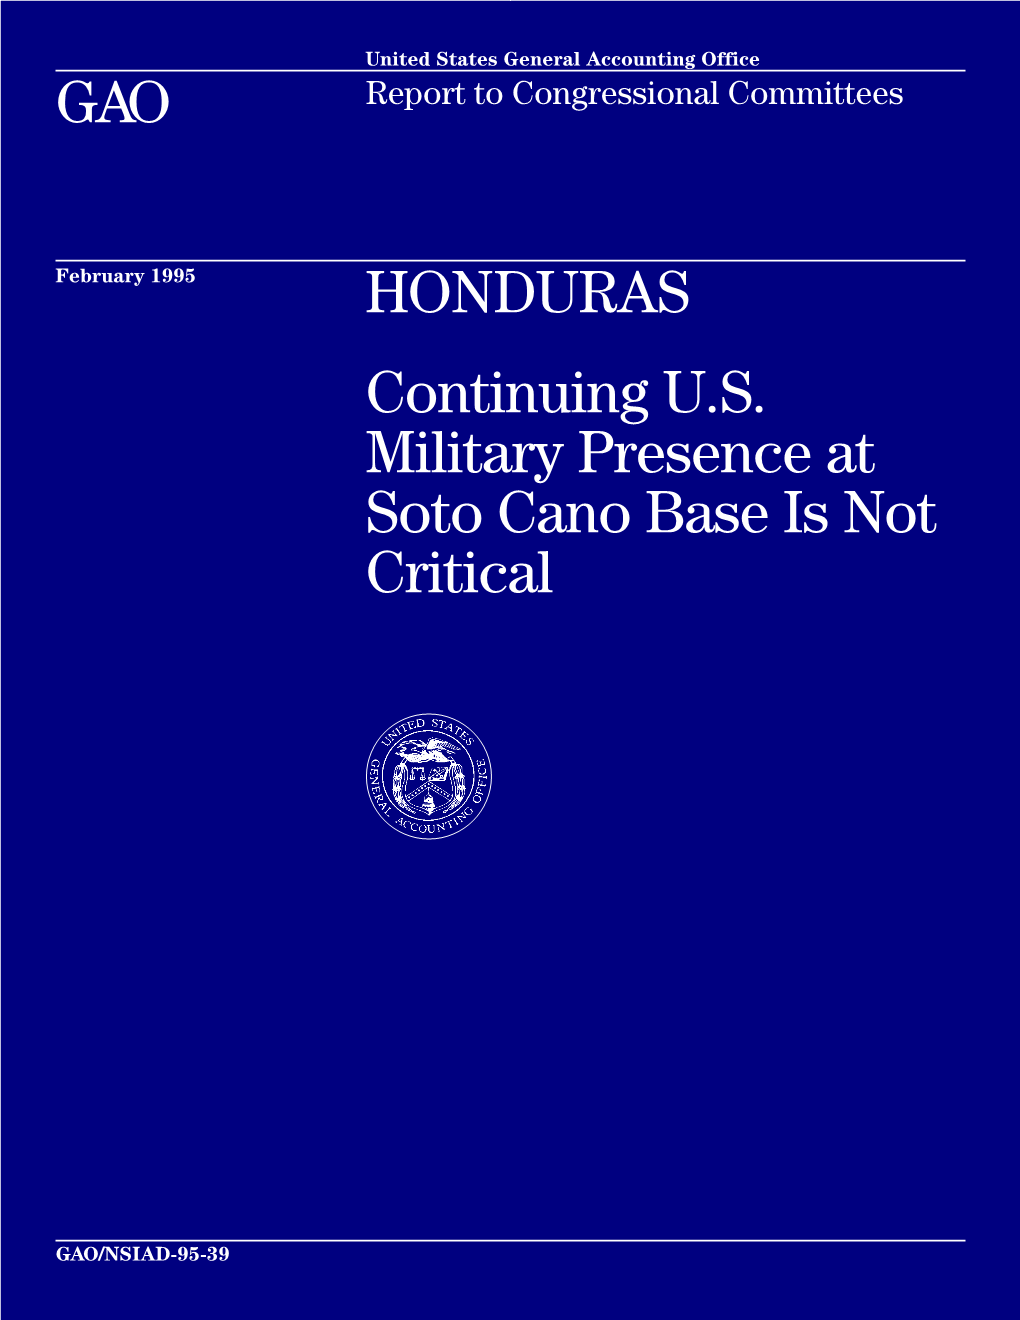 Honduras: Continuing U.S. Military Presence at Soto Cano Base Is Not Critical